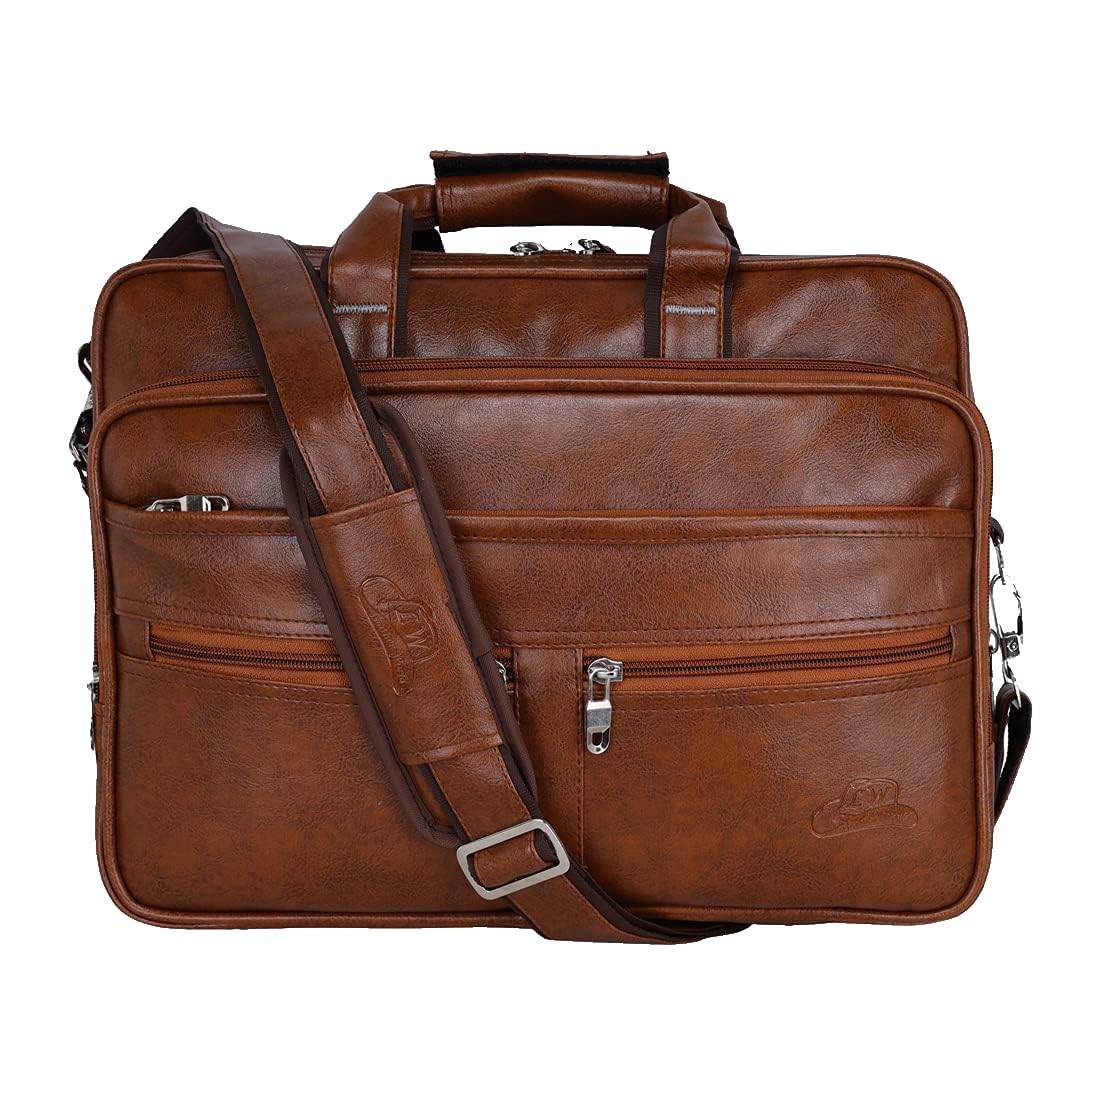 Business Class Unisex Faux Leather 15.6 Inch Office Laptop Bag - Tan